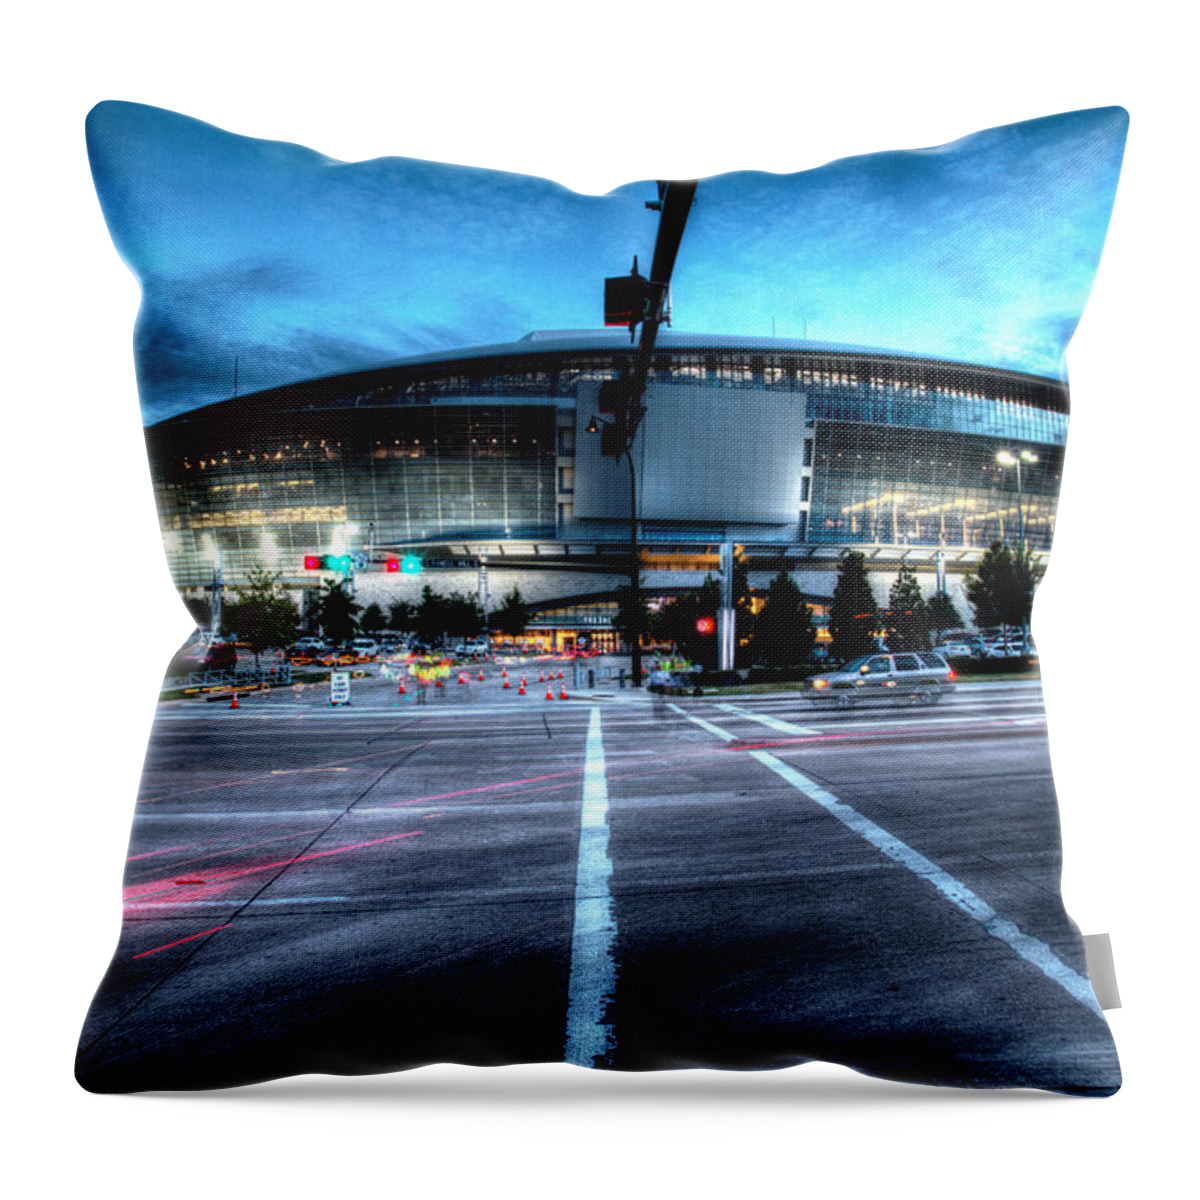 Dallas Cowboys Throw Pillow featuring the photograph Cowboys Stadium pregame by Jonathan Davison